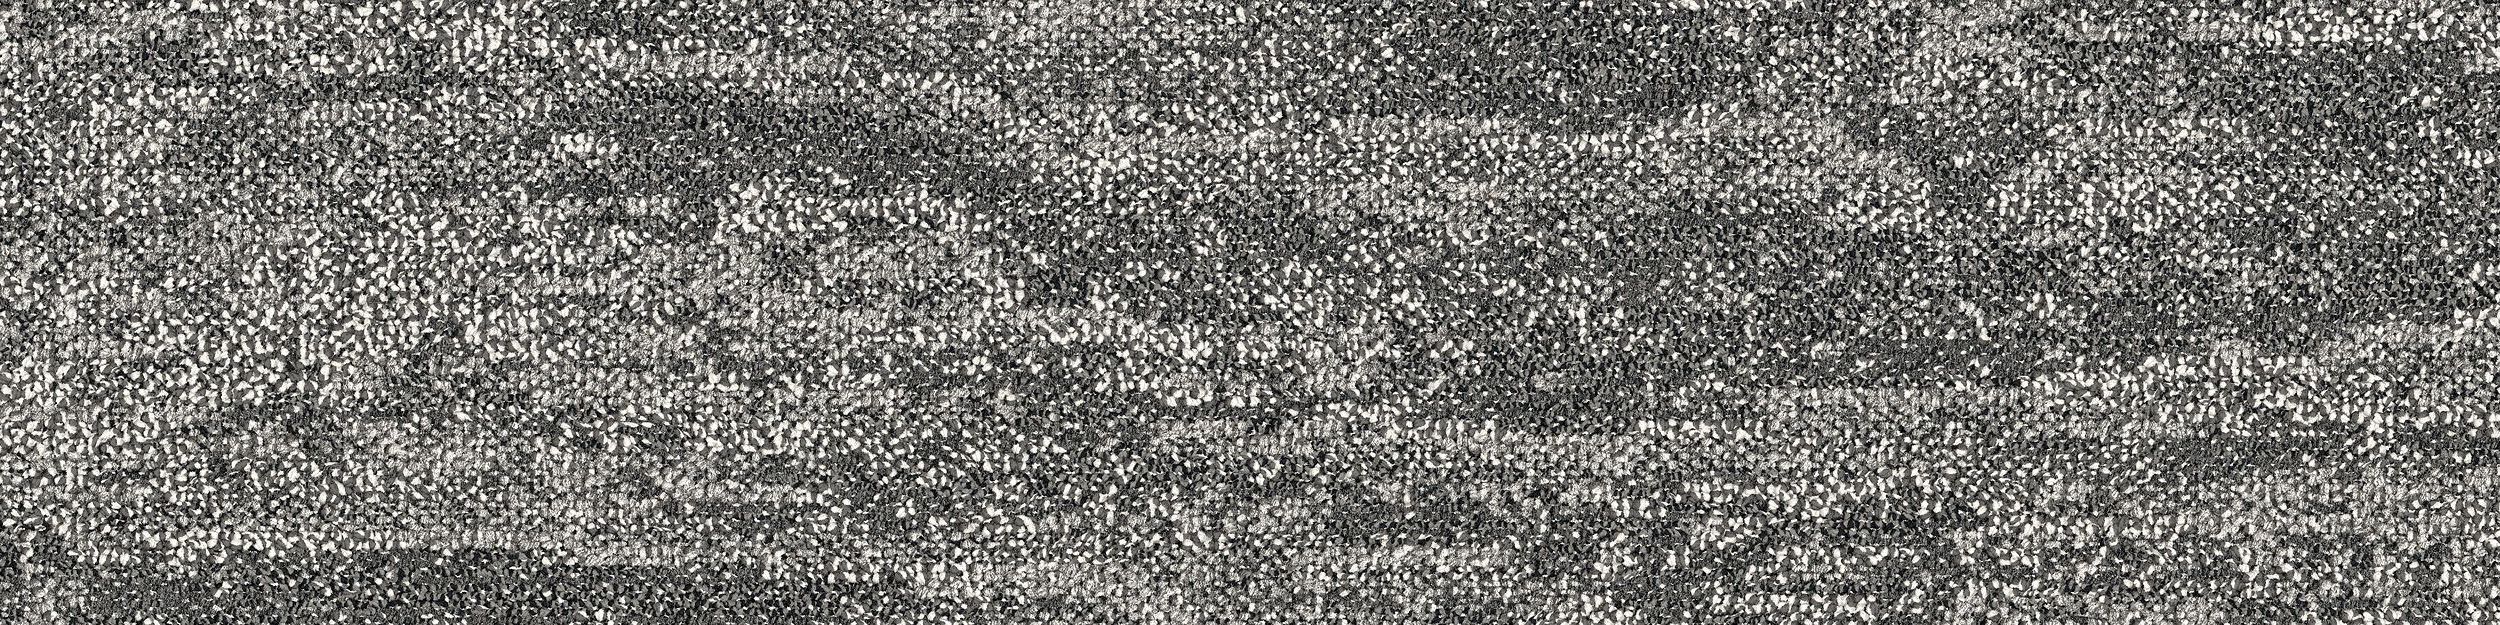 Rock Springs Carpet Tile In Nickel Gneiss numéro d’image 2